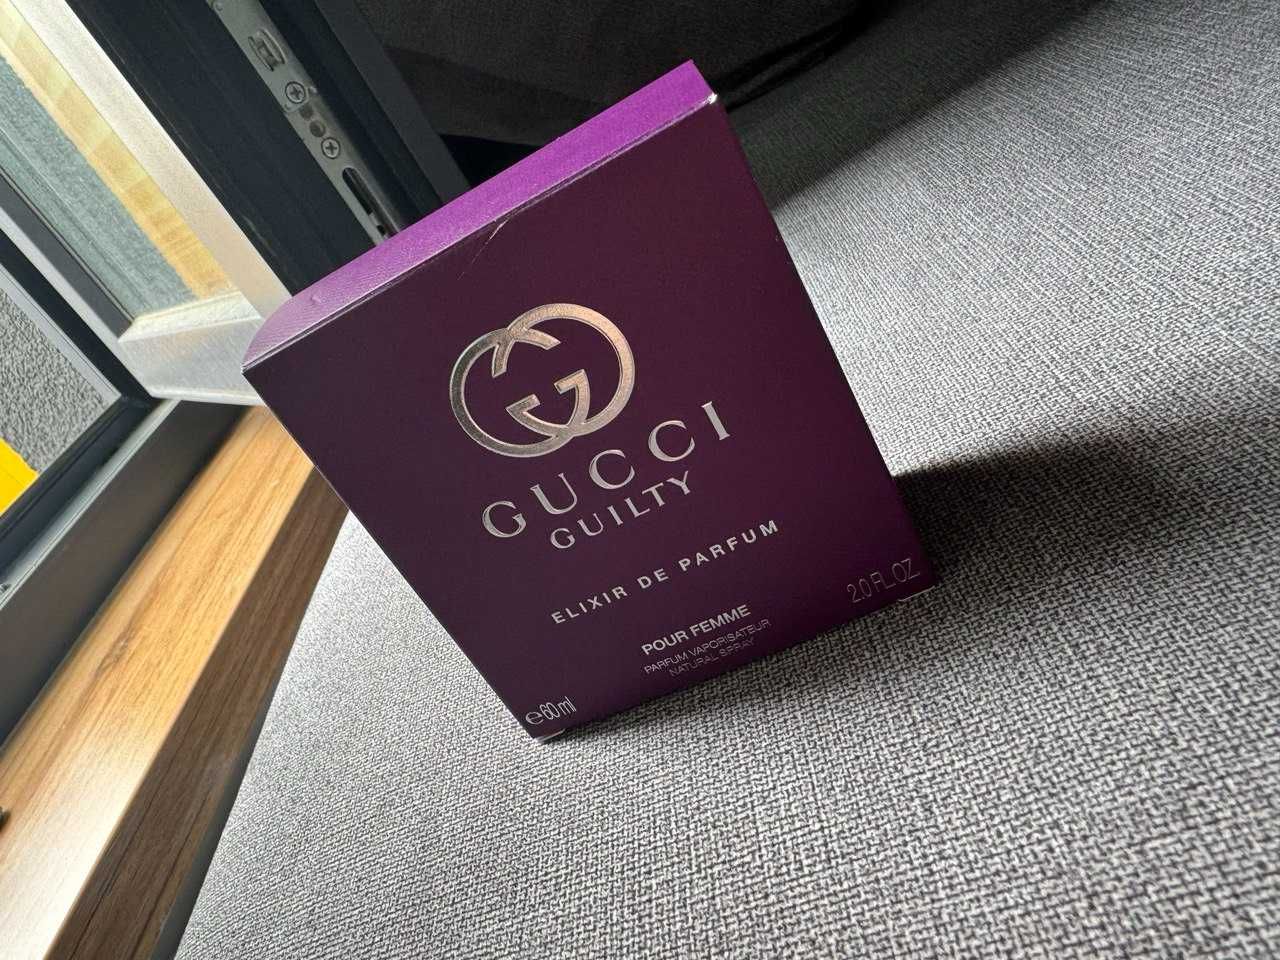 Perfum Gucci Guity